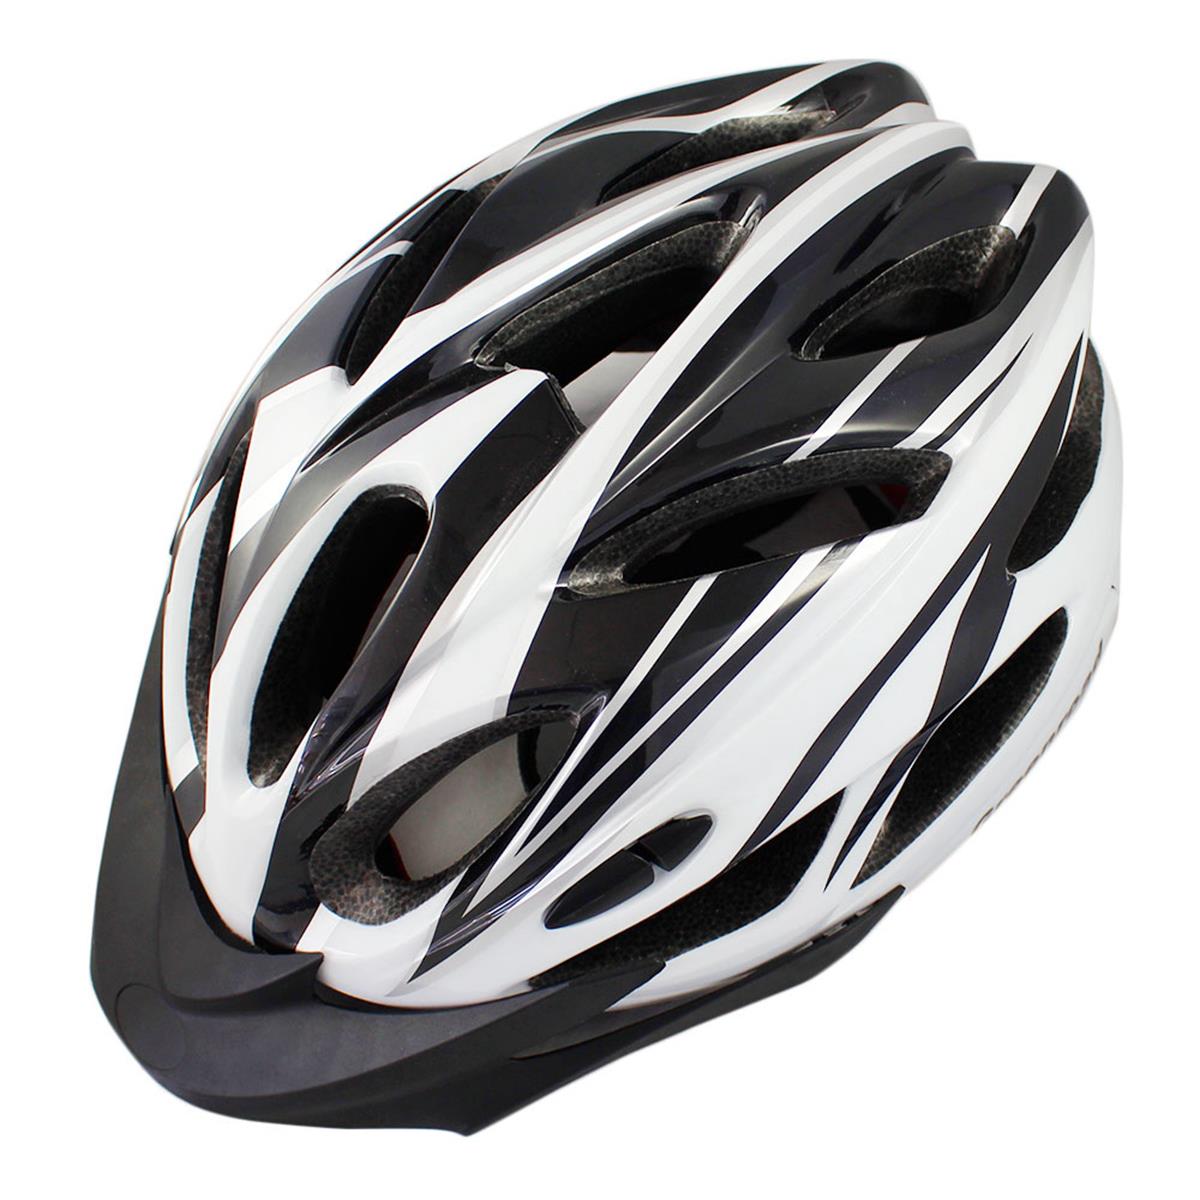 Velecs MTB/Road Bike Bicycle Outdoor Riding Sport Safety Helmet+Visor (LW 821, Black)